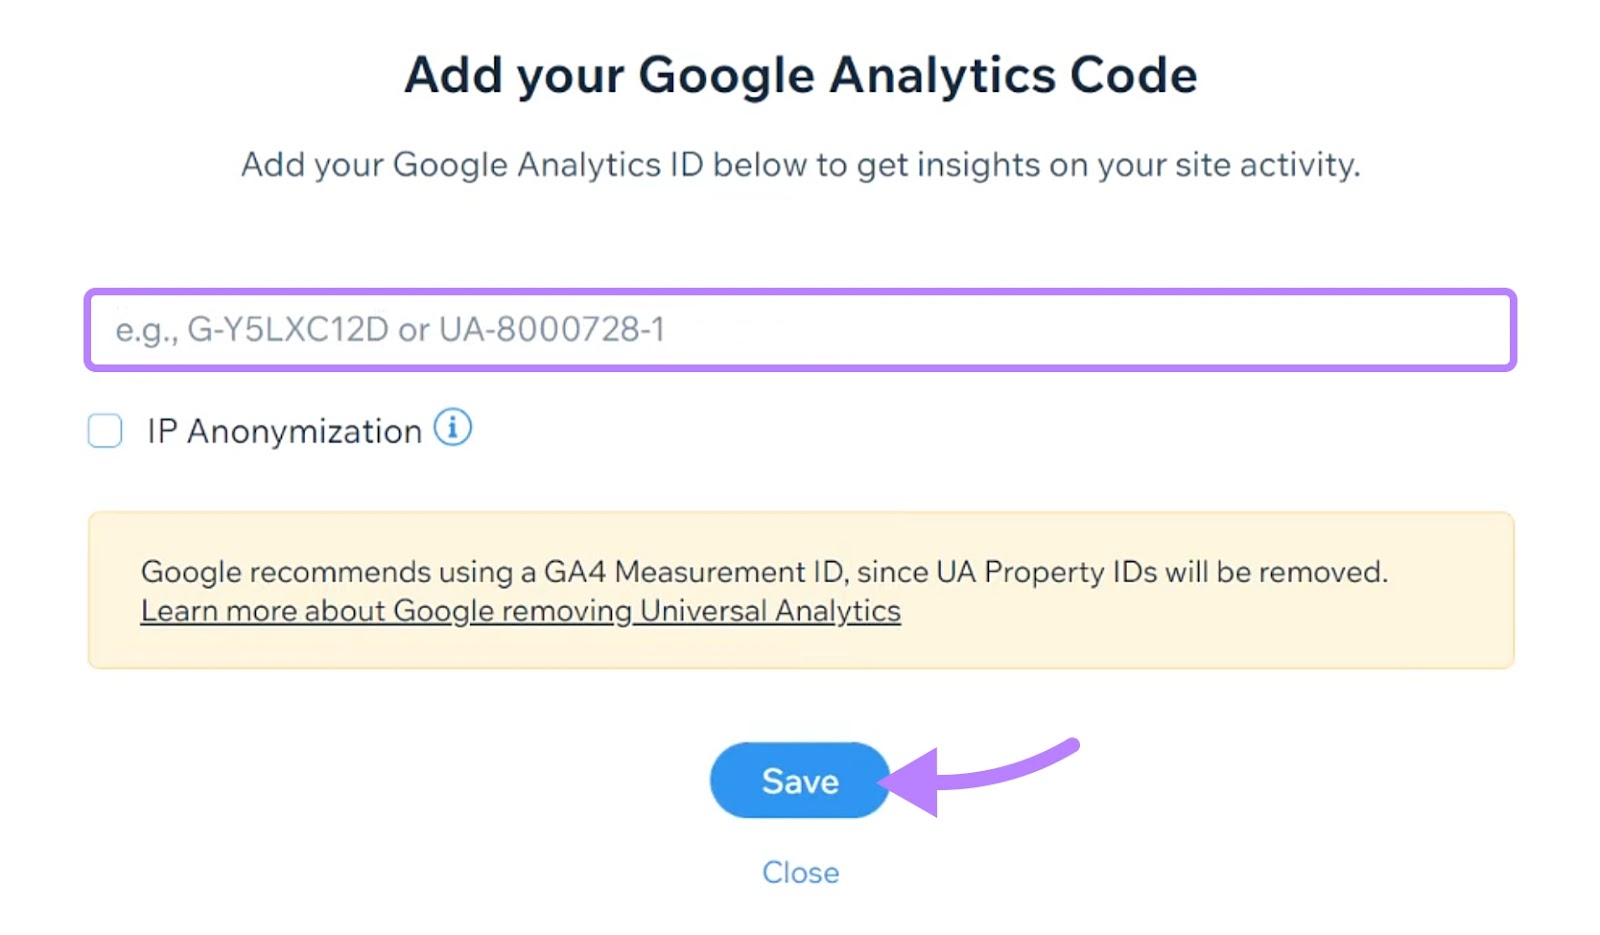 Enter Google Analytics ID and "Save"